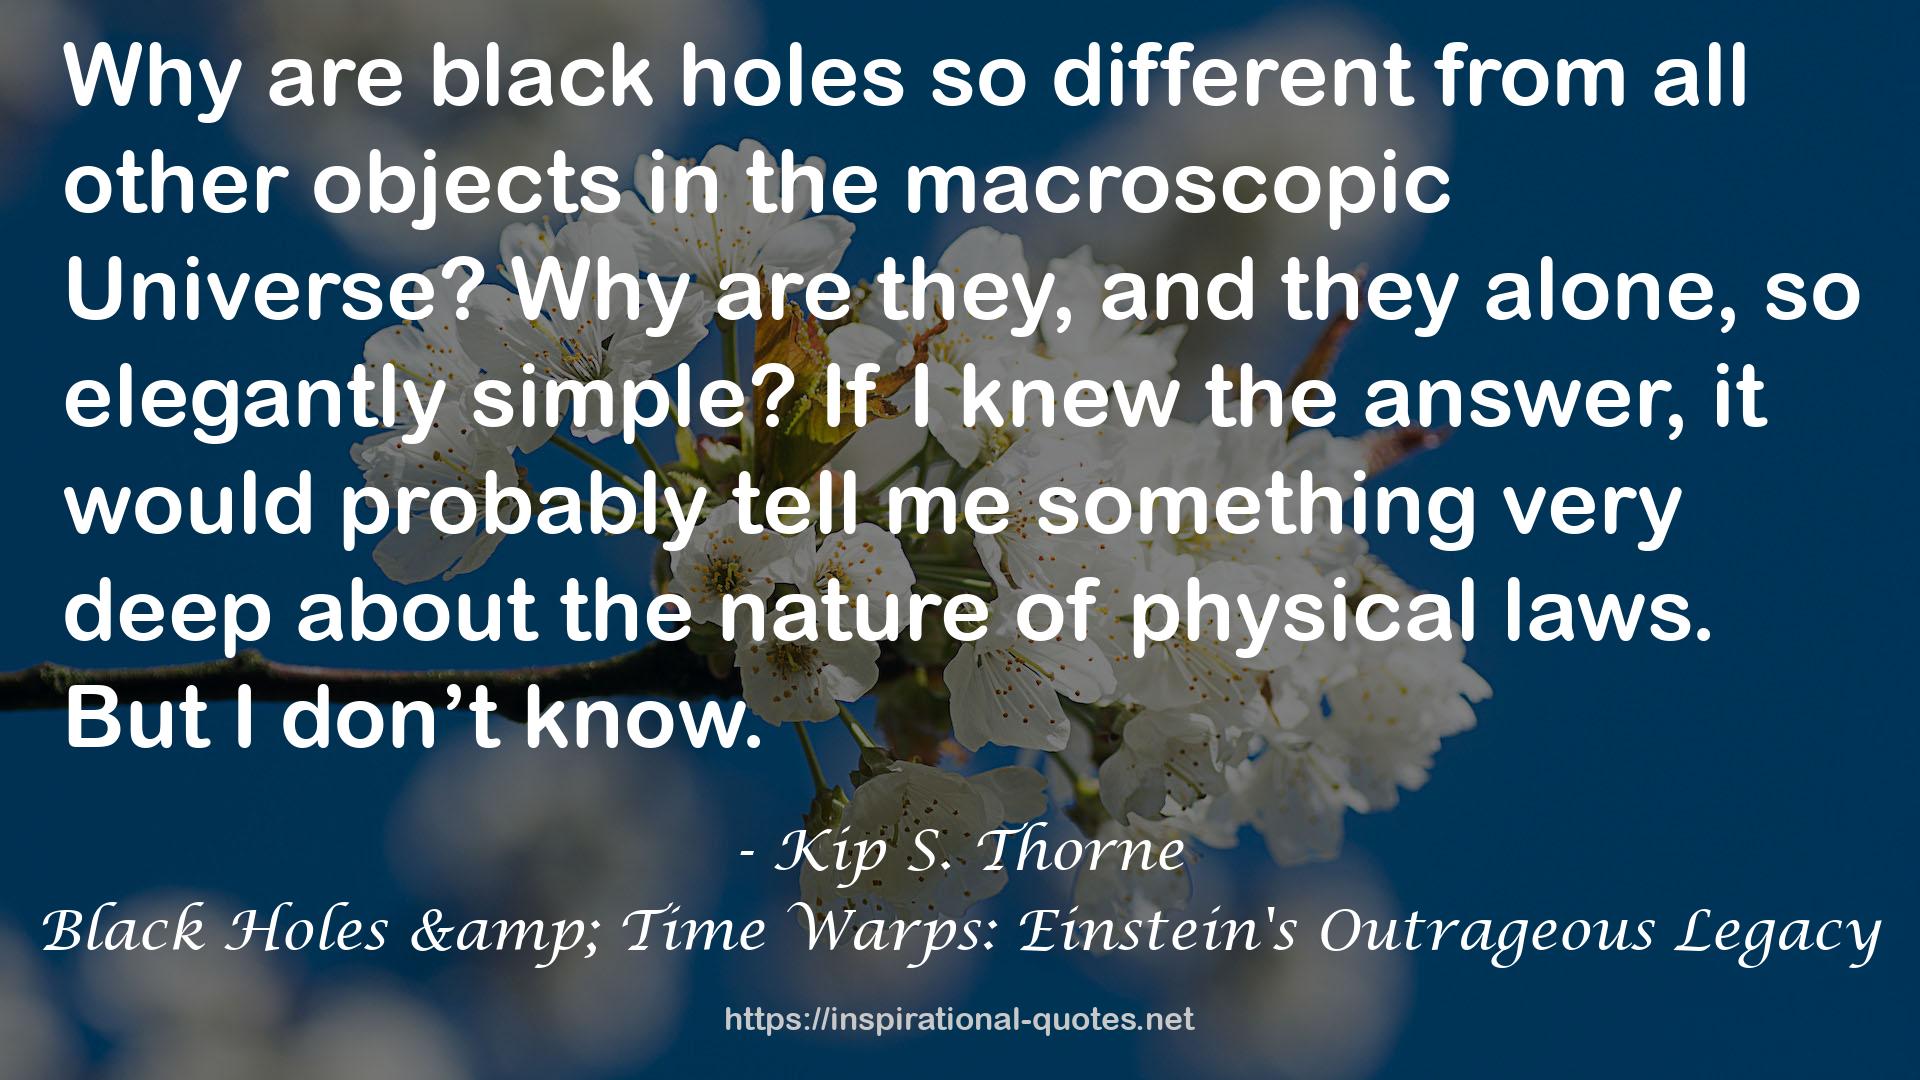 Black Holes & Time Warps: Einstein's Outrageous Legacy QUOTES